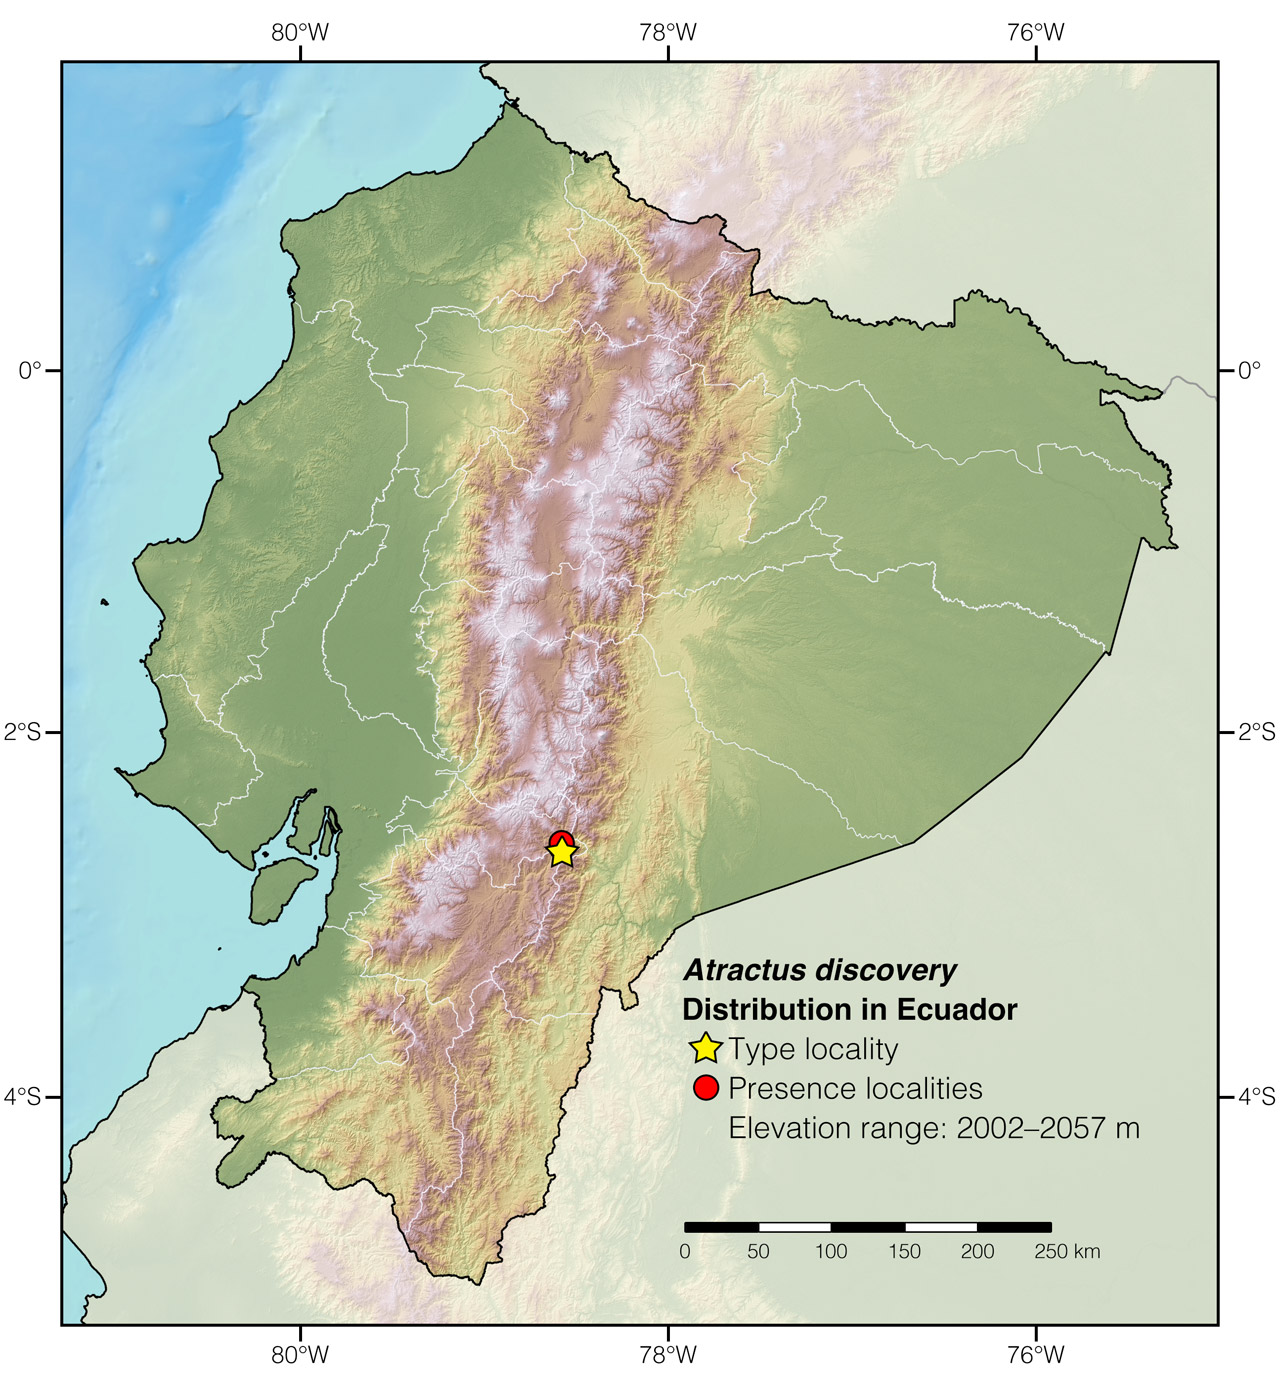 Distribution of Atractus discovery in Ecuador